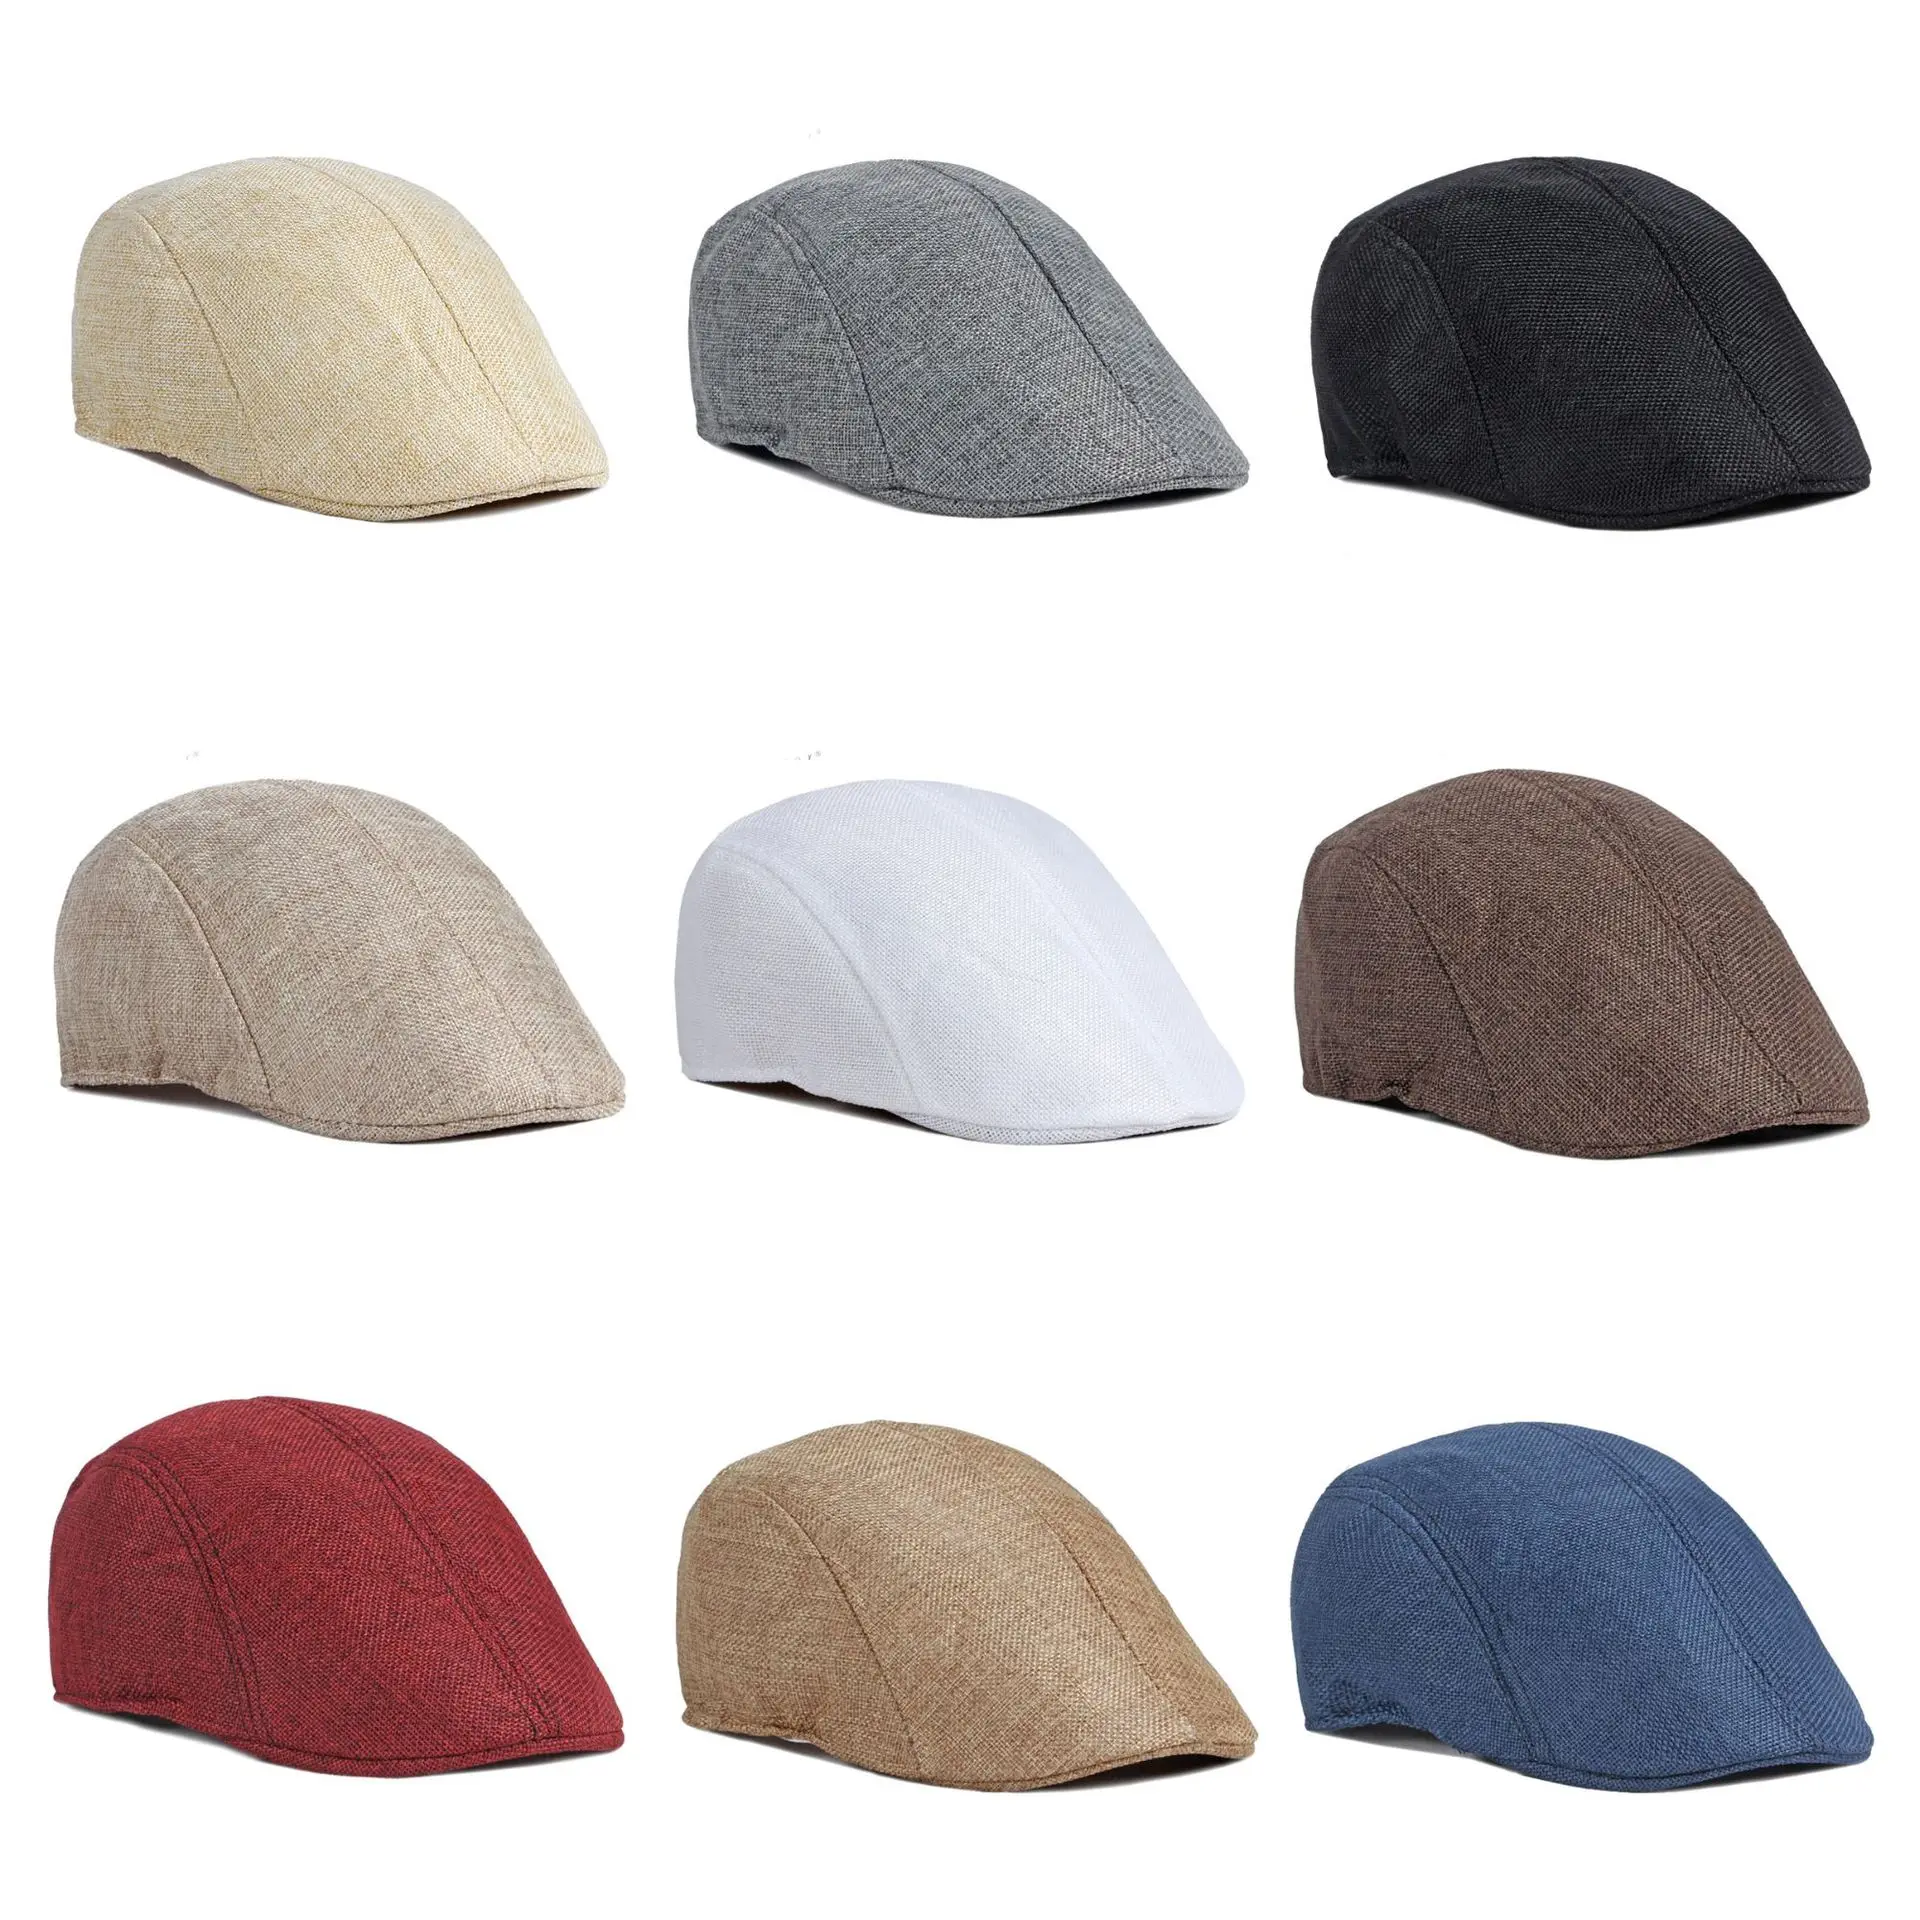 D summer men s solid color hat imitation hemp beret british retro summer breathable hat thumb200